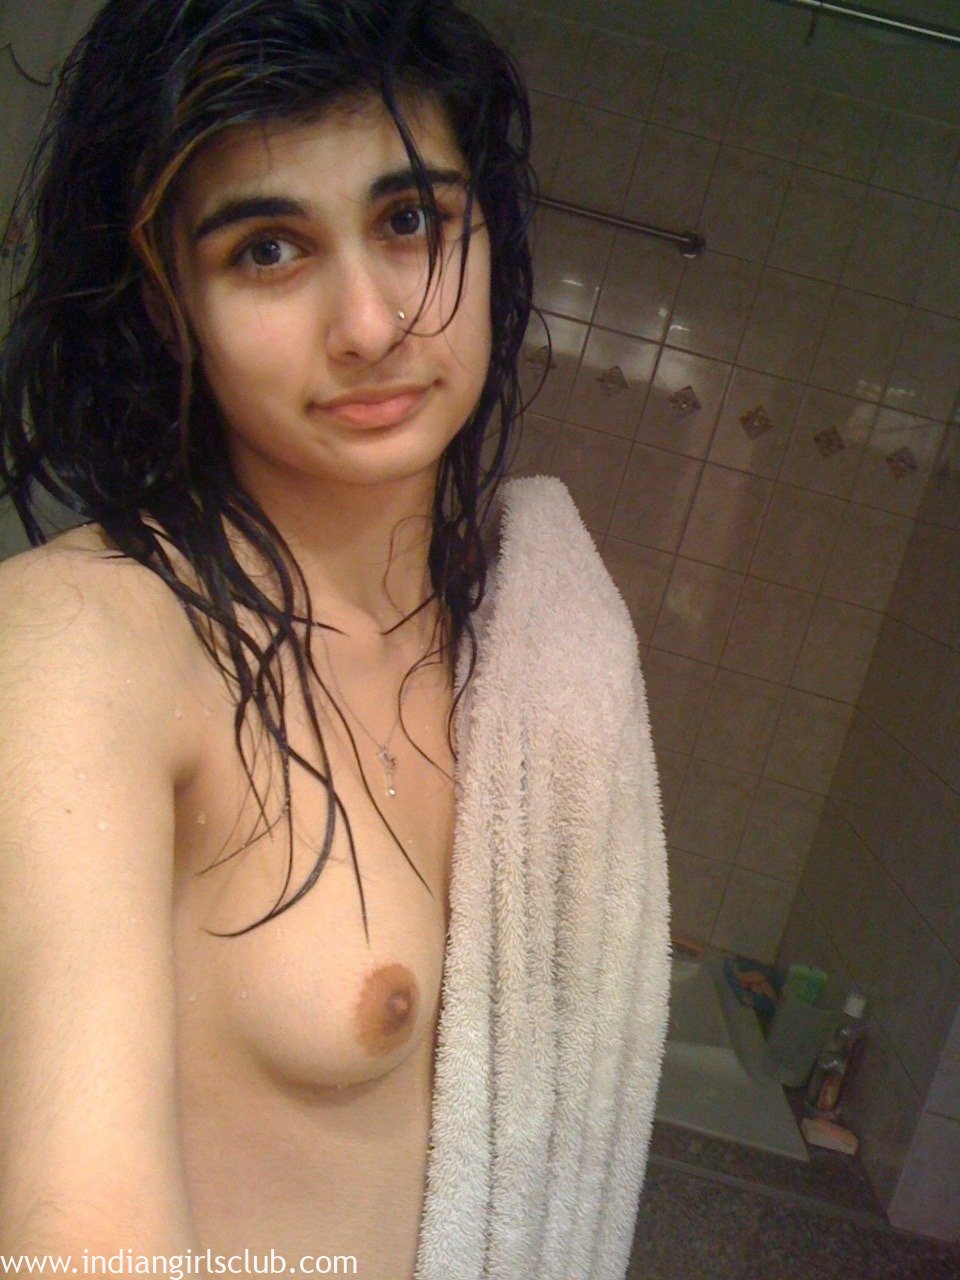 Pakistan Nude Models - Sexy Beautiful Pakistani Girl Nude - Indian Girls Club